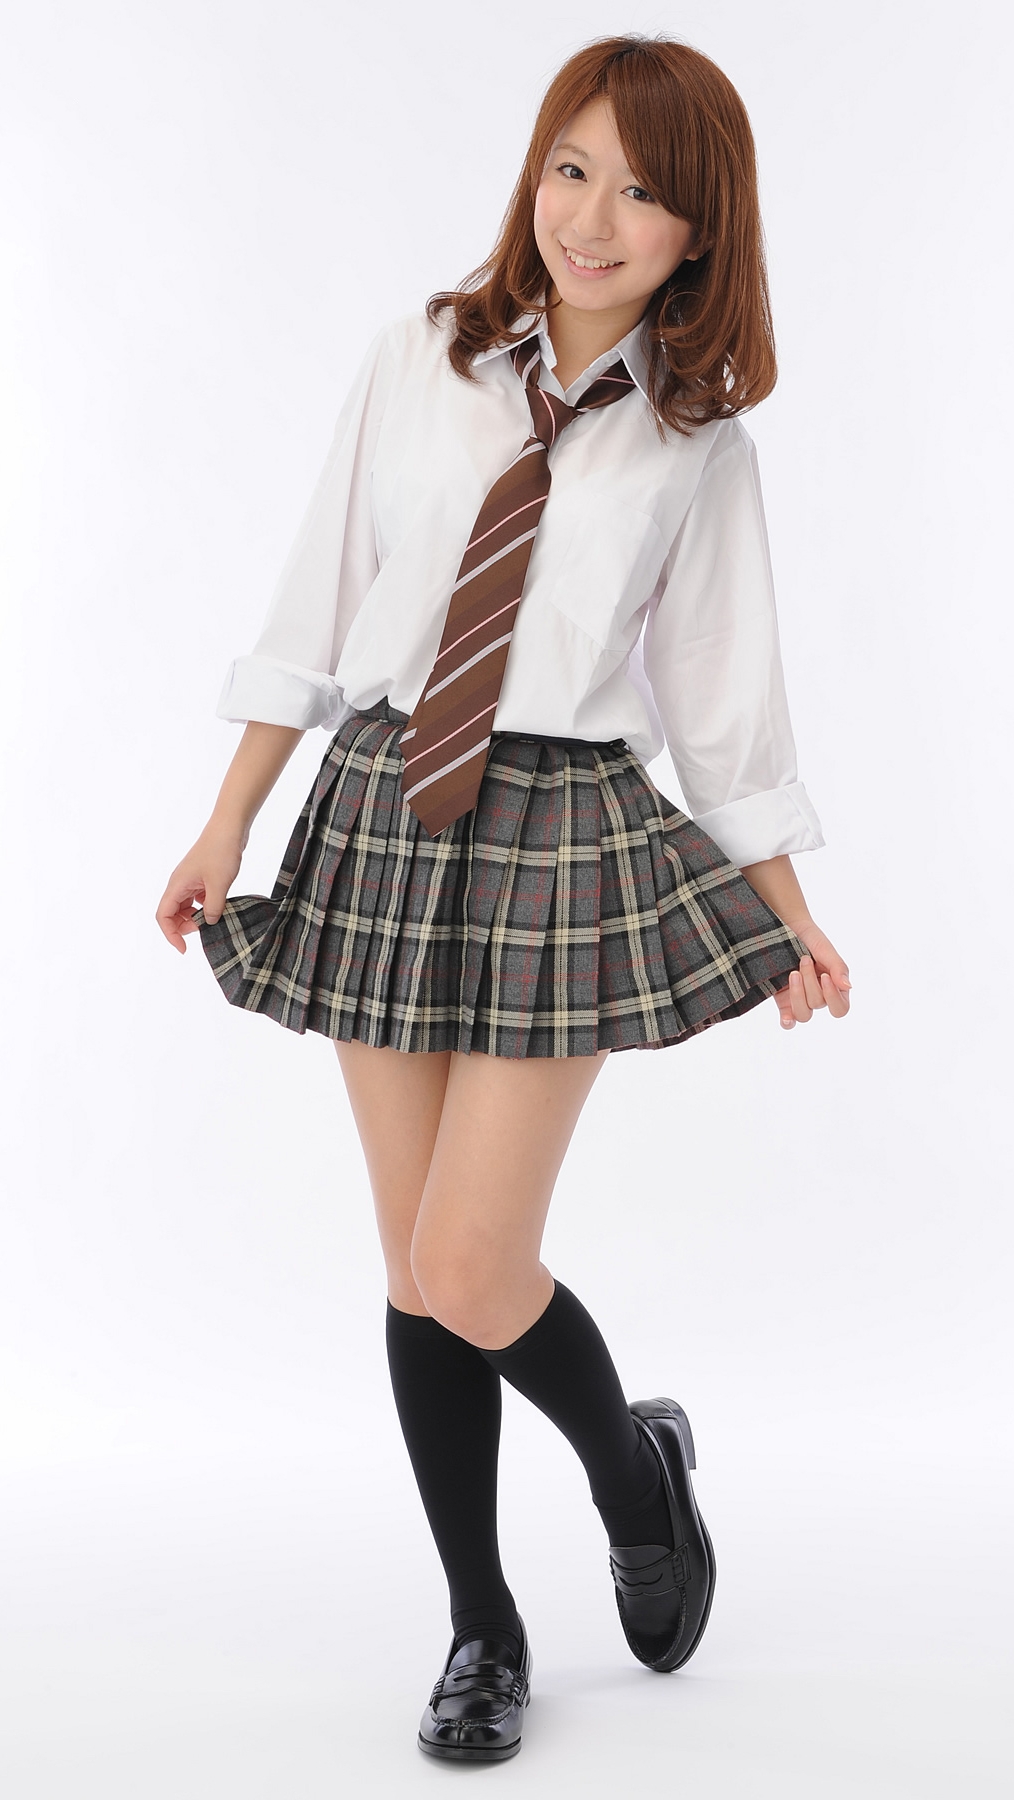 Redhead Asian Schoolgirl wearing Black Long Socks and Black Shoes